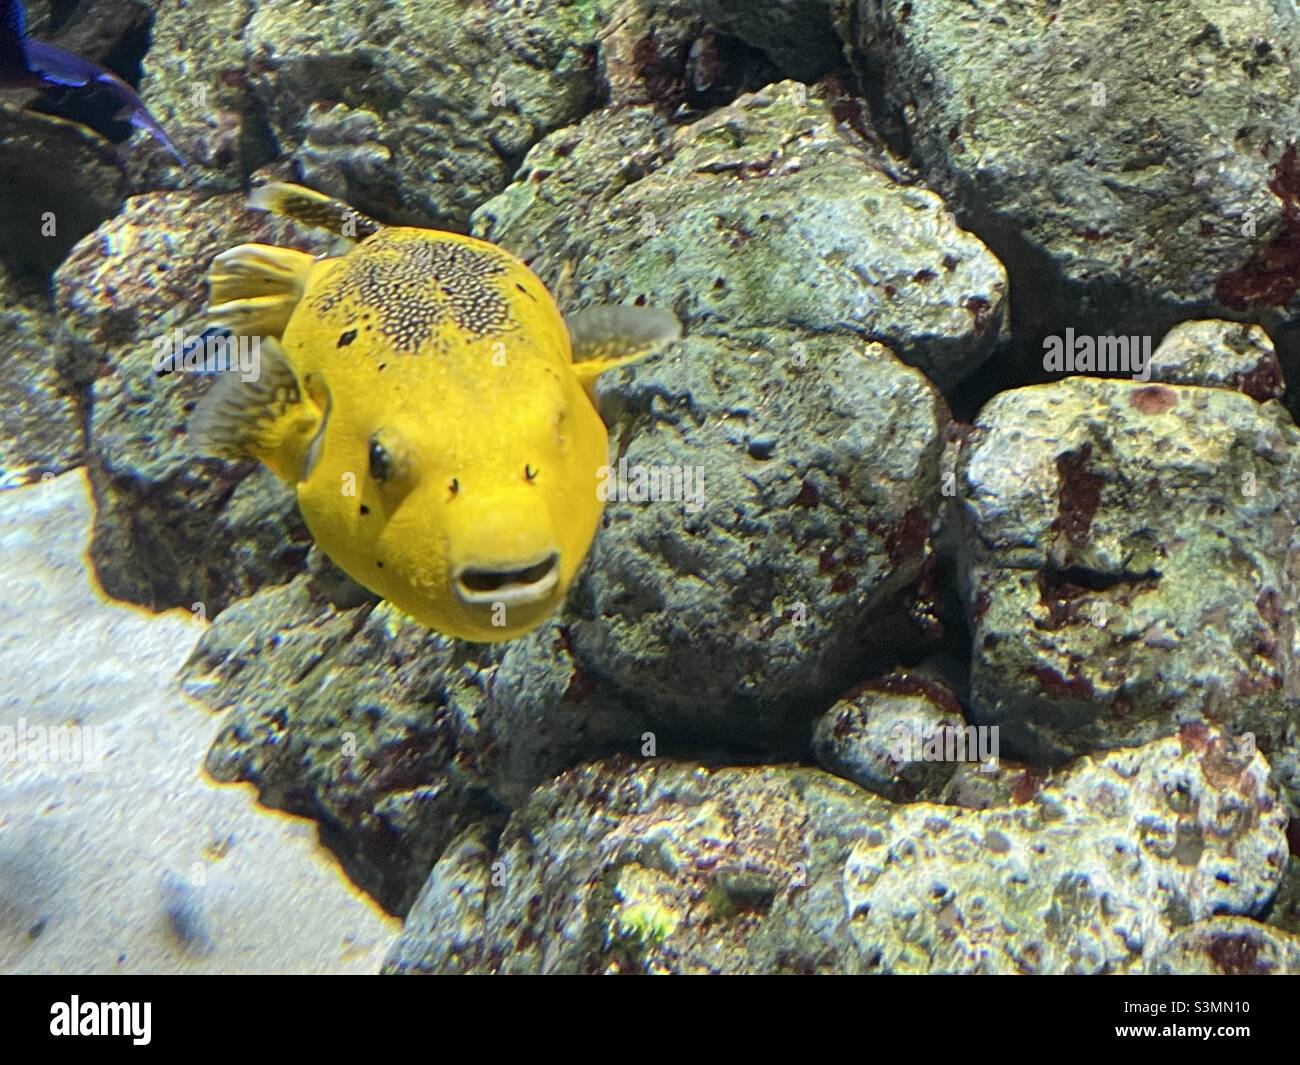 One eyed yellow fish in an aquarium Stock Photo